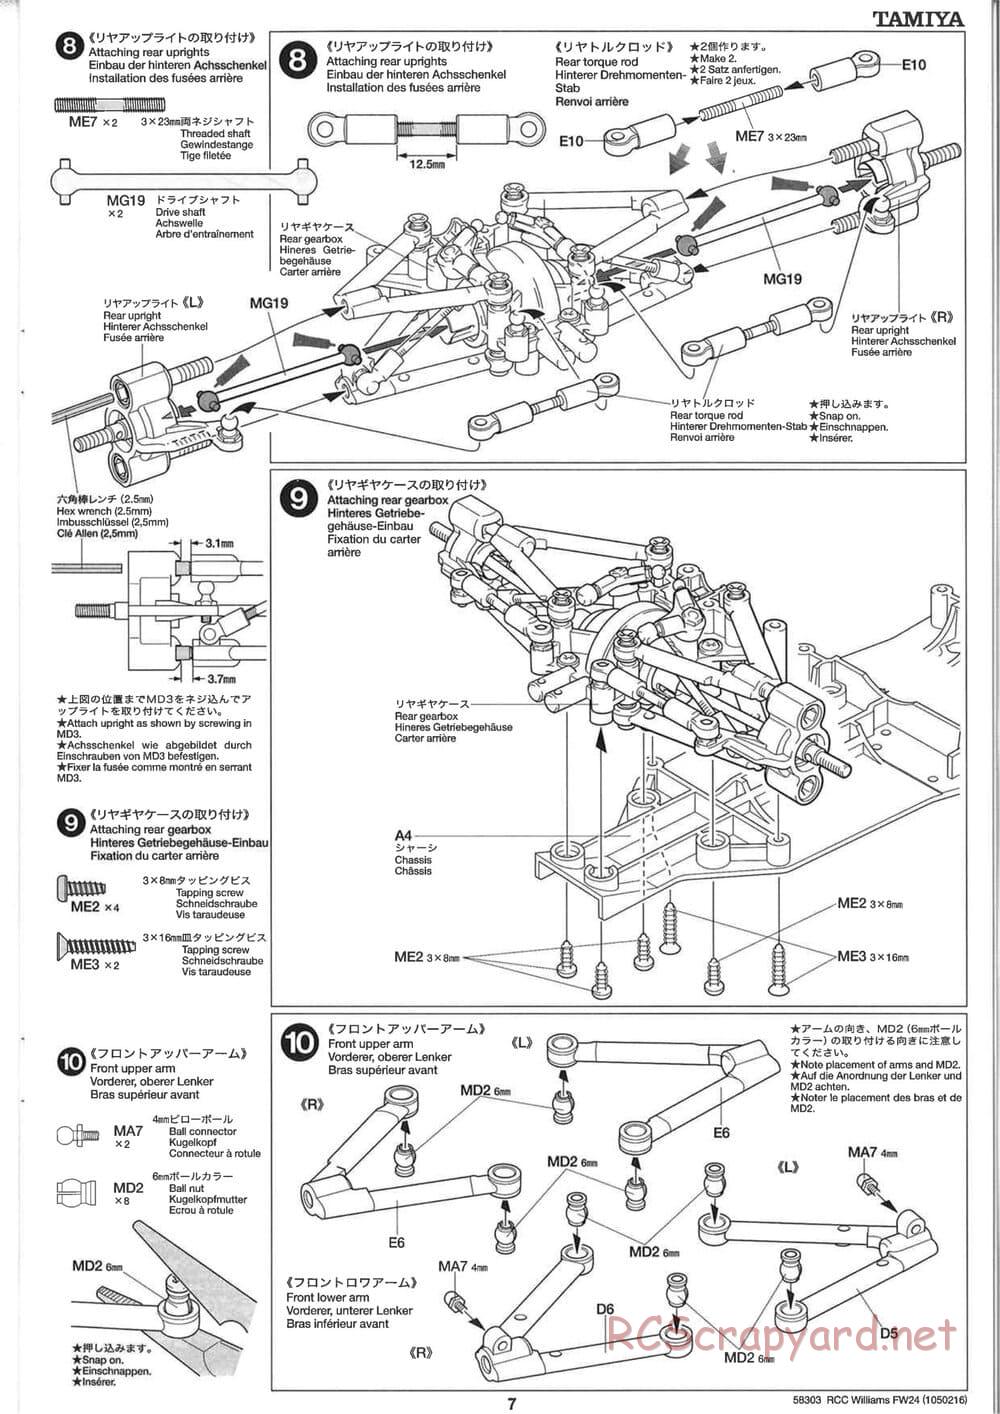 Tamiya - Williams F1 BMW FW24 - F201 Chassis - Manual - Page 7